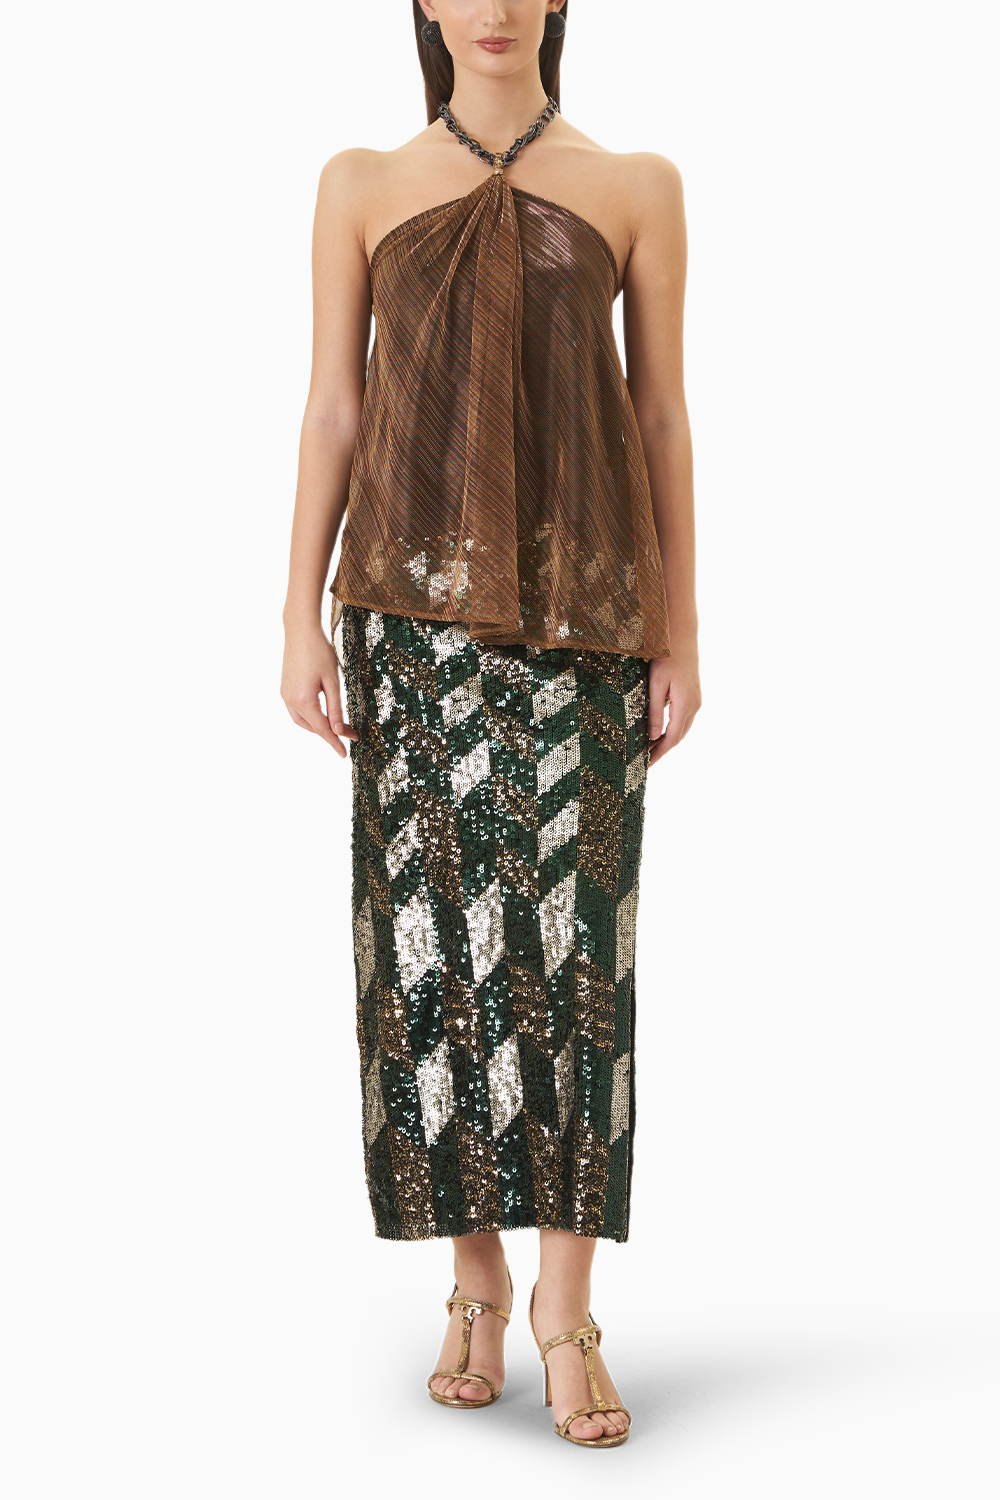 Jewel Tone Drape & Chain Lamé Top and Sequin Skirt